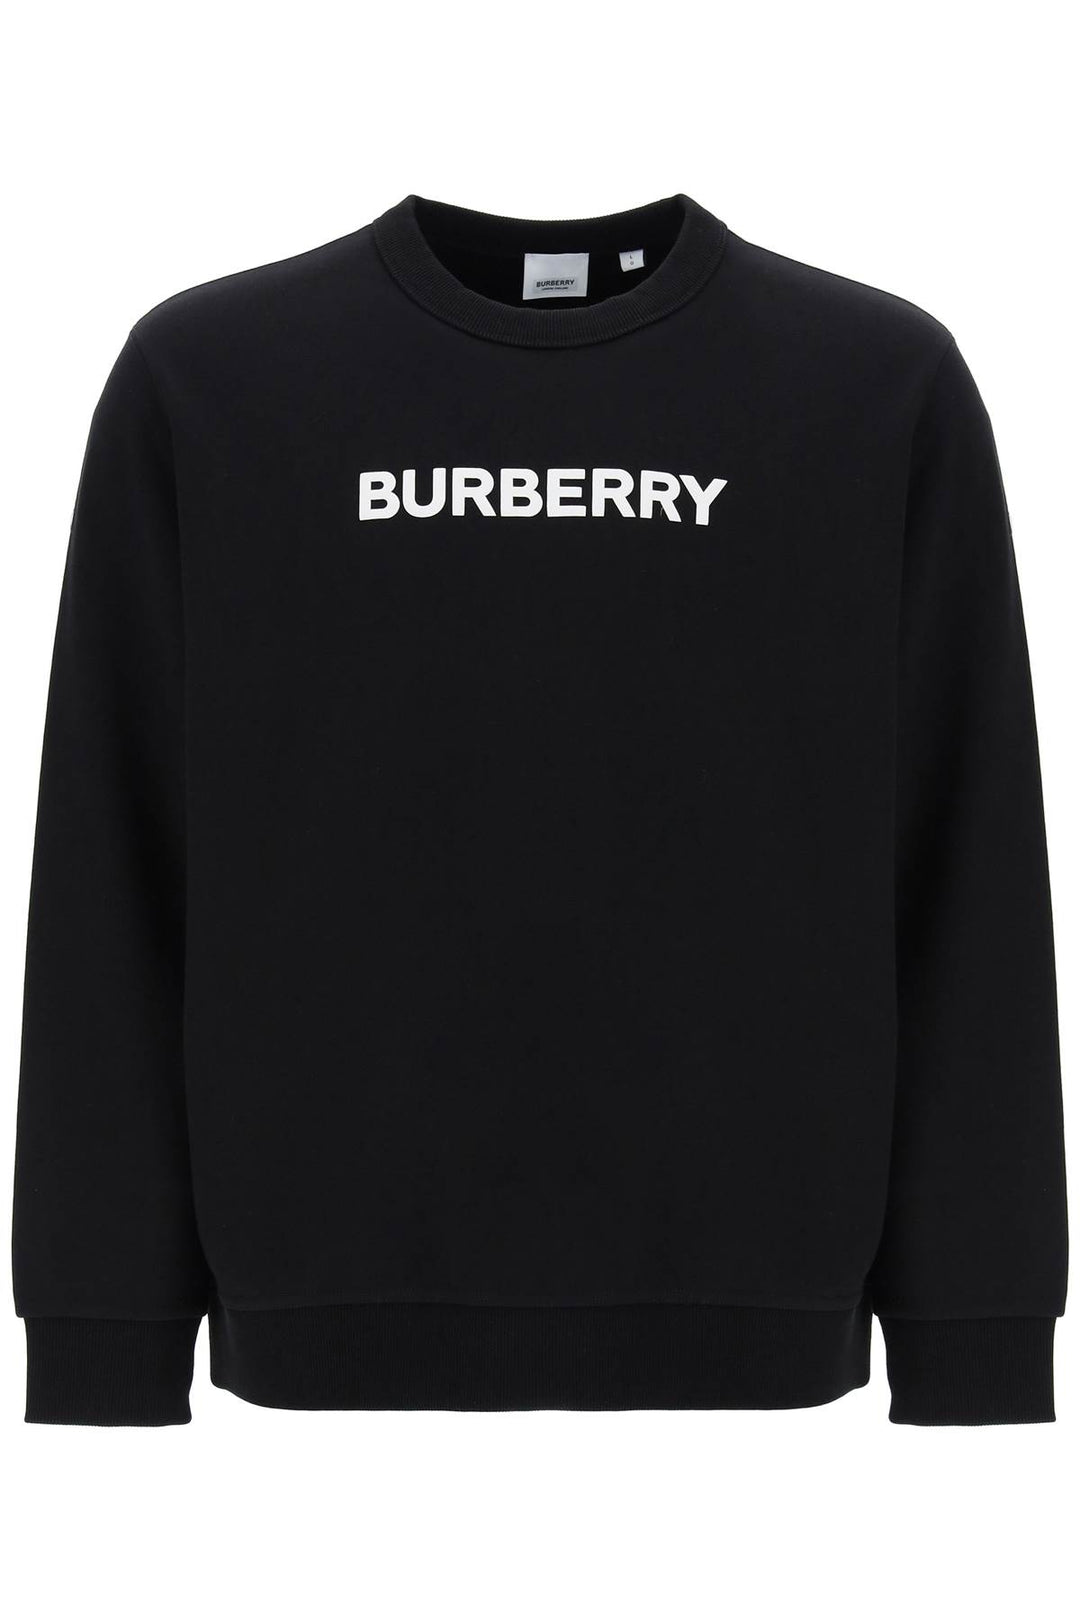 Burberry Sweatshirt With Puff Logo   Nero